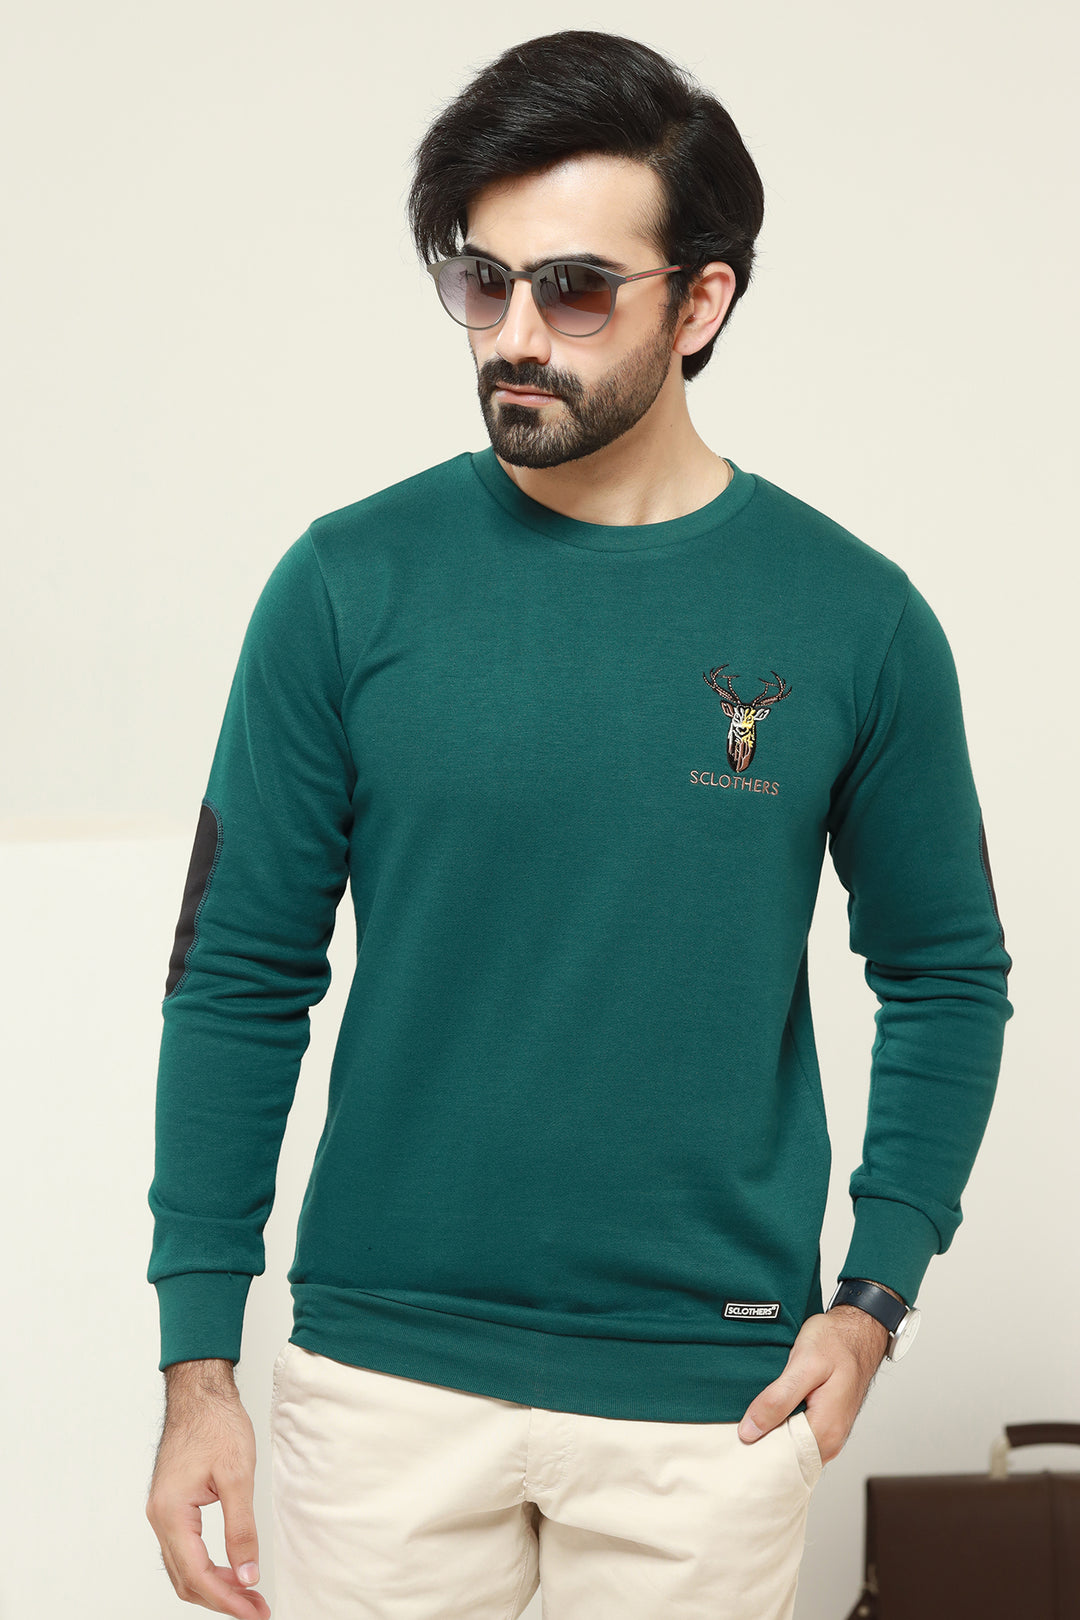 Embroidery Sweatshirts in Pakistan